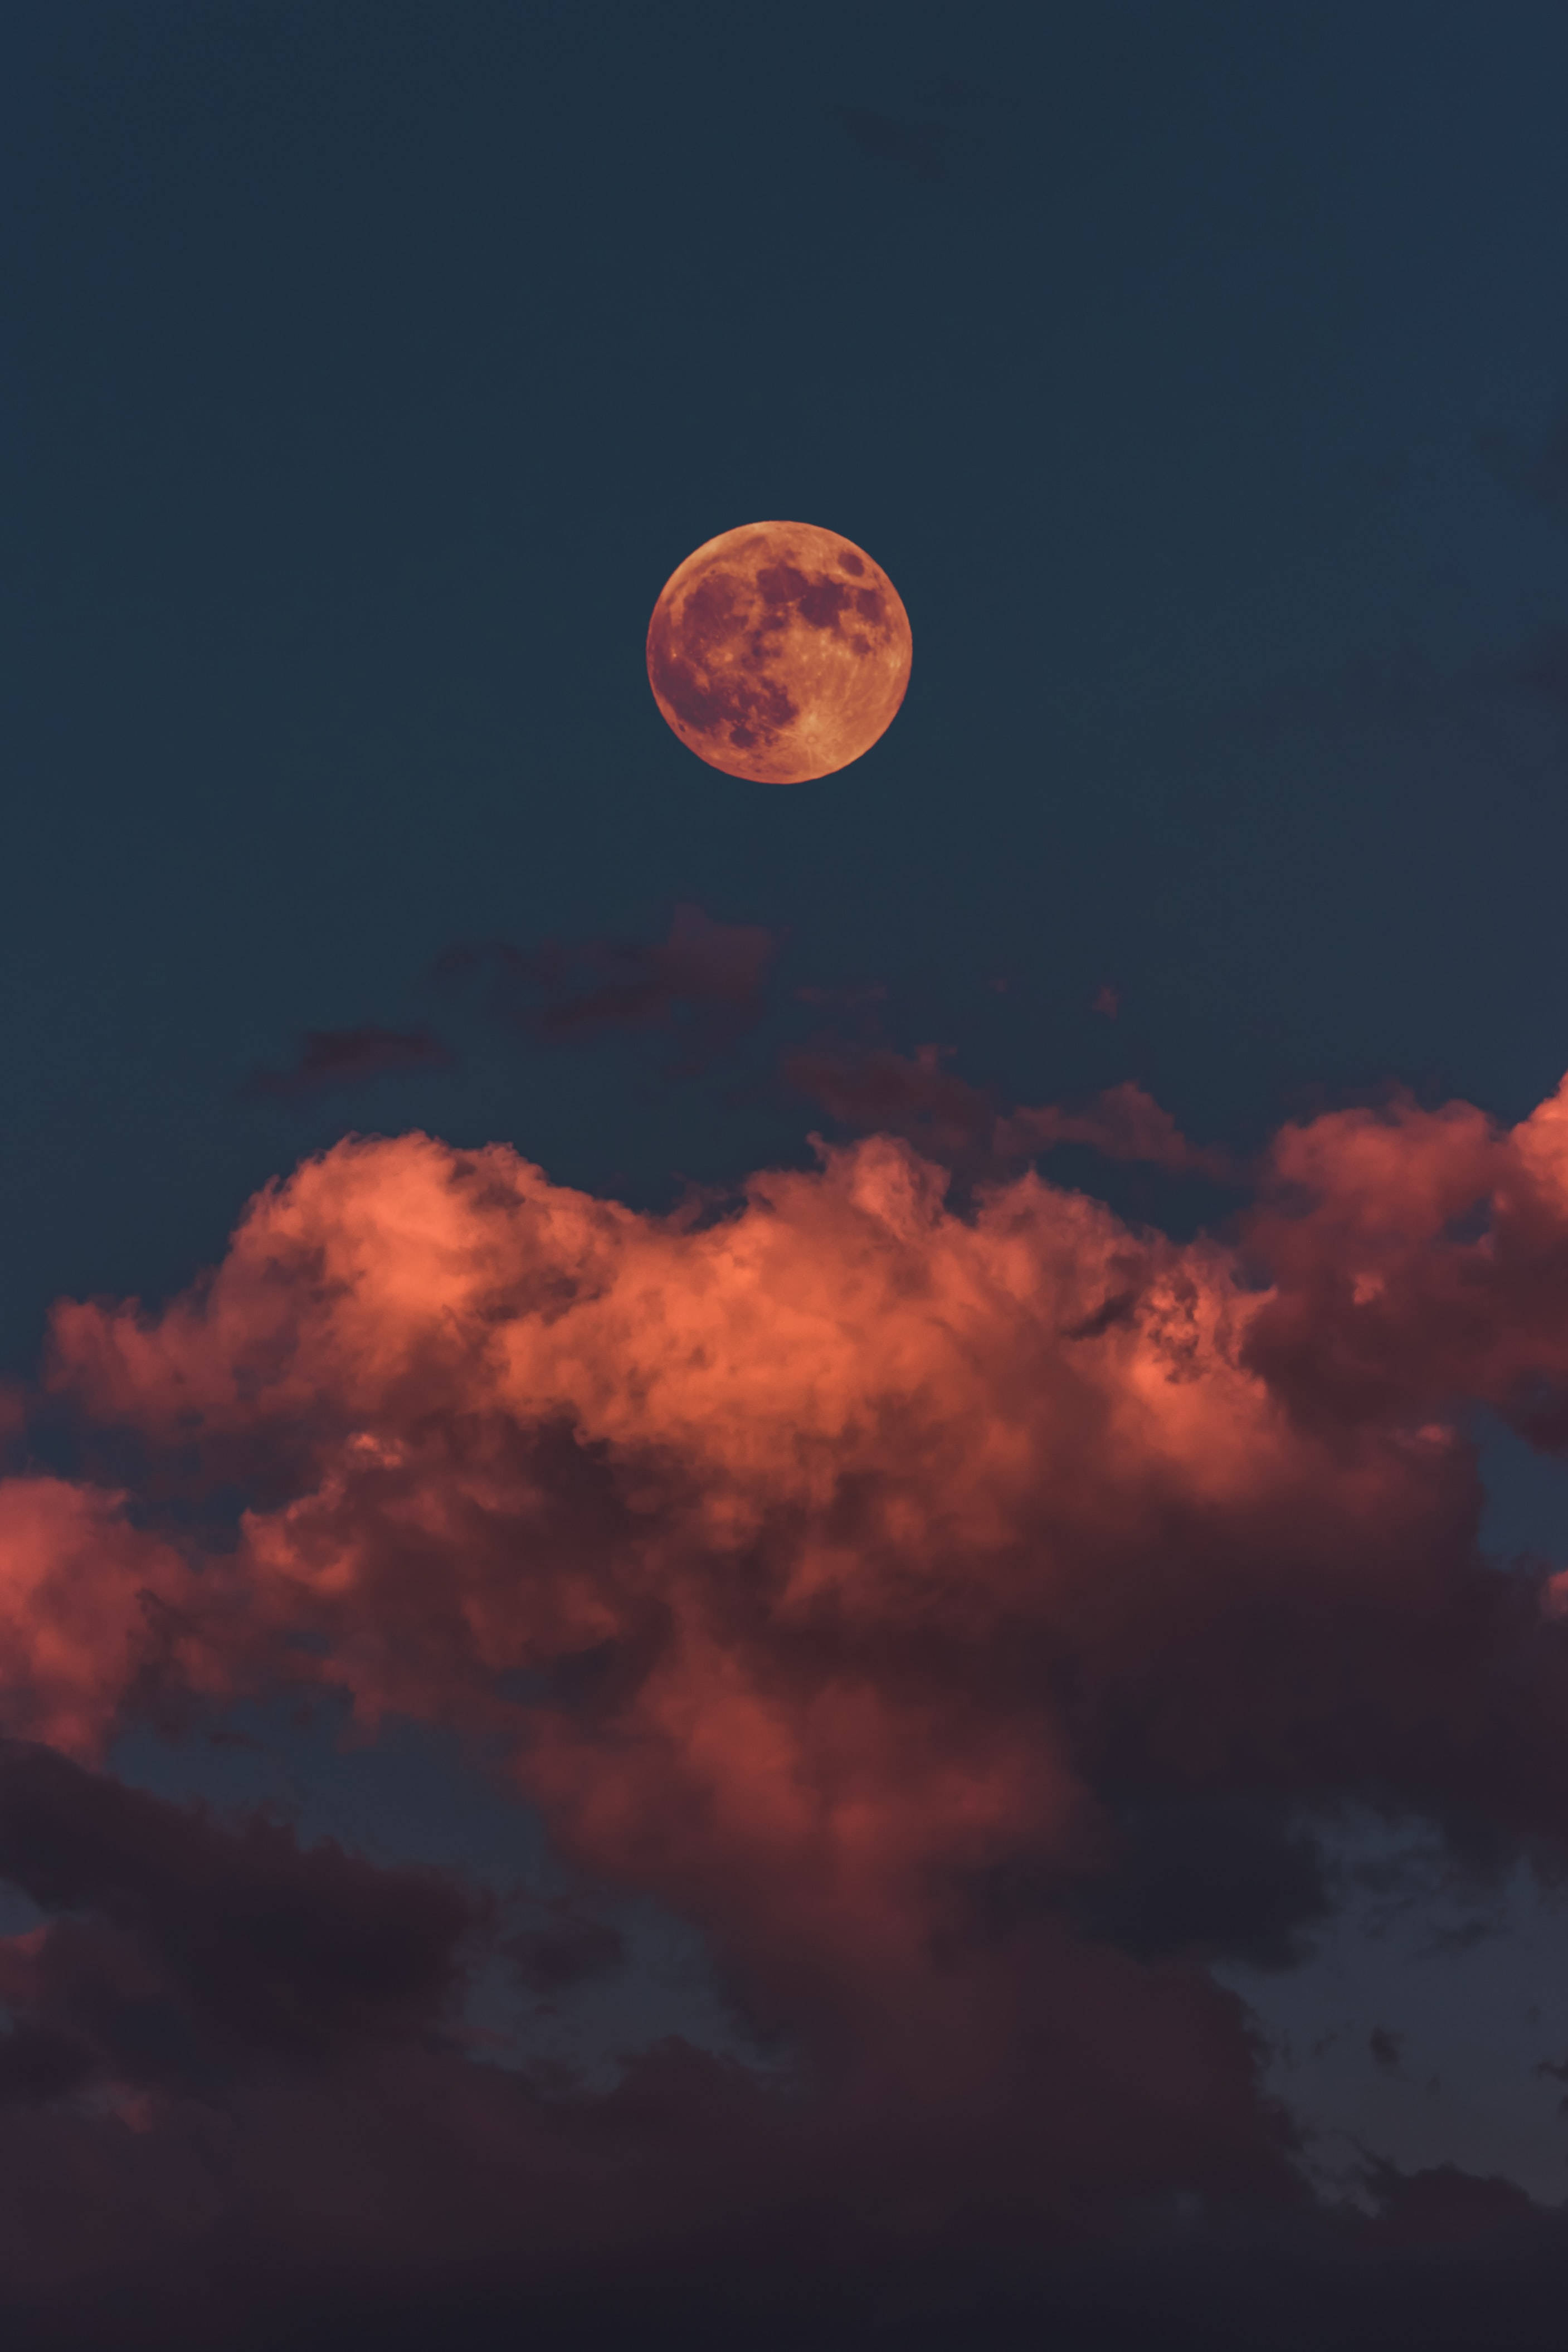 Spectacular Red Moon Glow On A Cloud-strewn Night Sky - 4k Ultra Hd